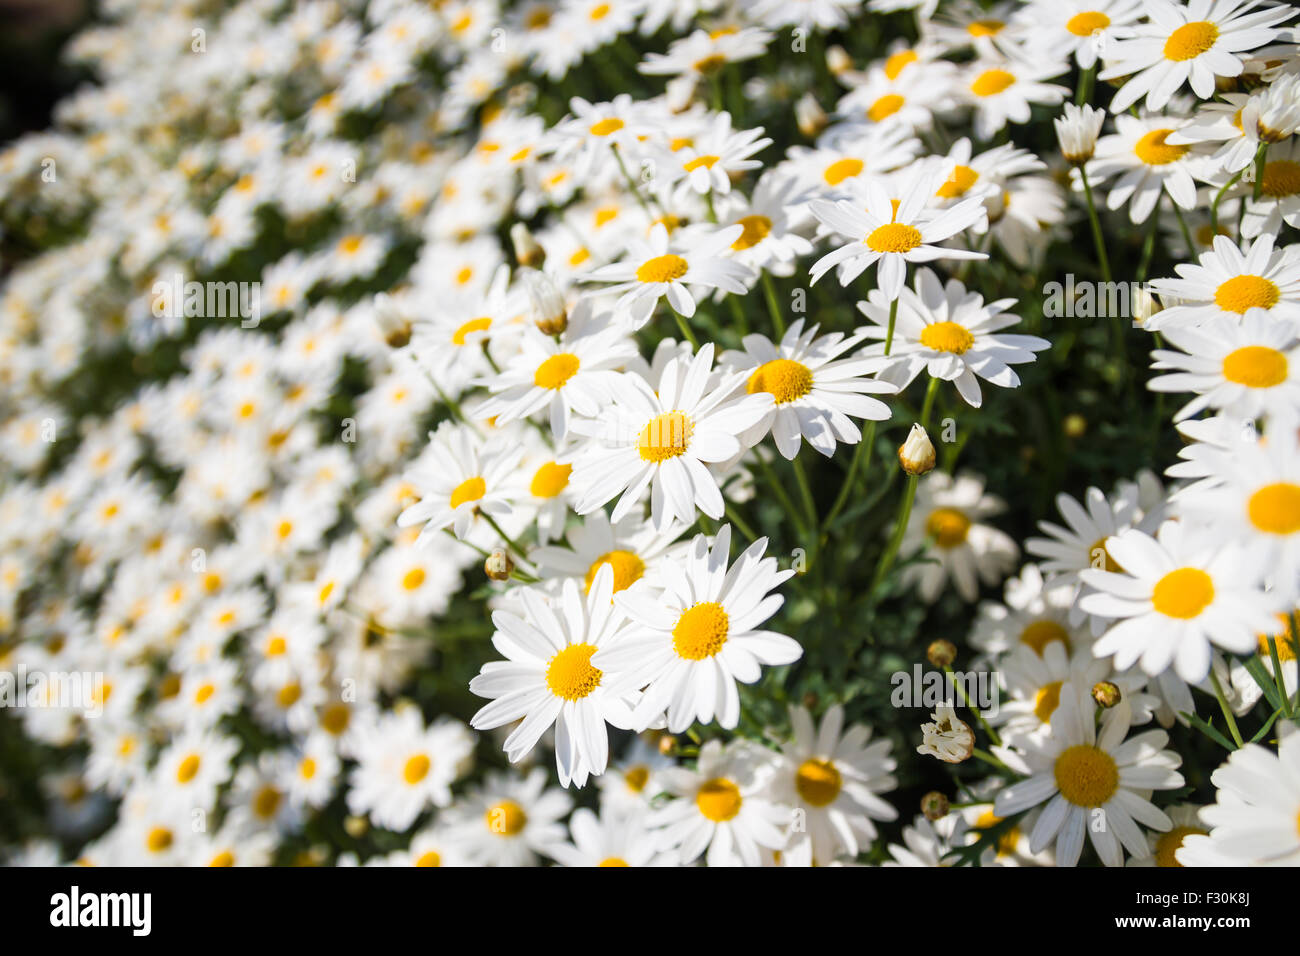 Schöne weiße Daisy am Doi Inthanon, Chiangrai, Thailand Stockfoto